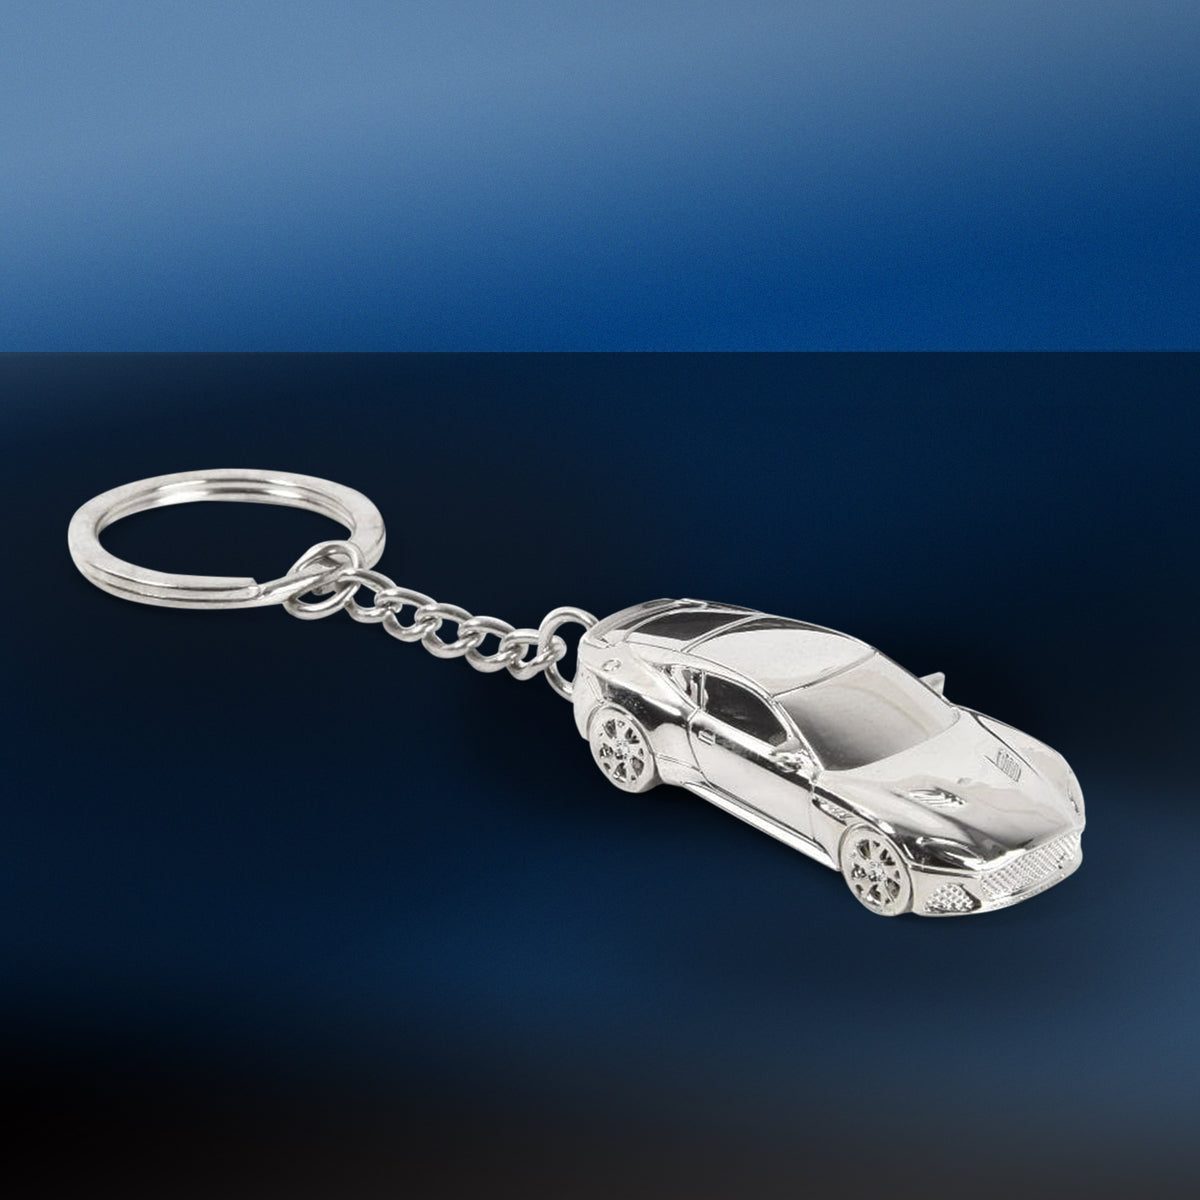 James Bond Aston Martin DBS Superleggera Car Keyring - No Time To Die Edition